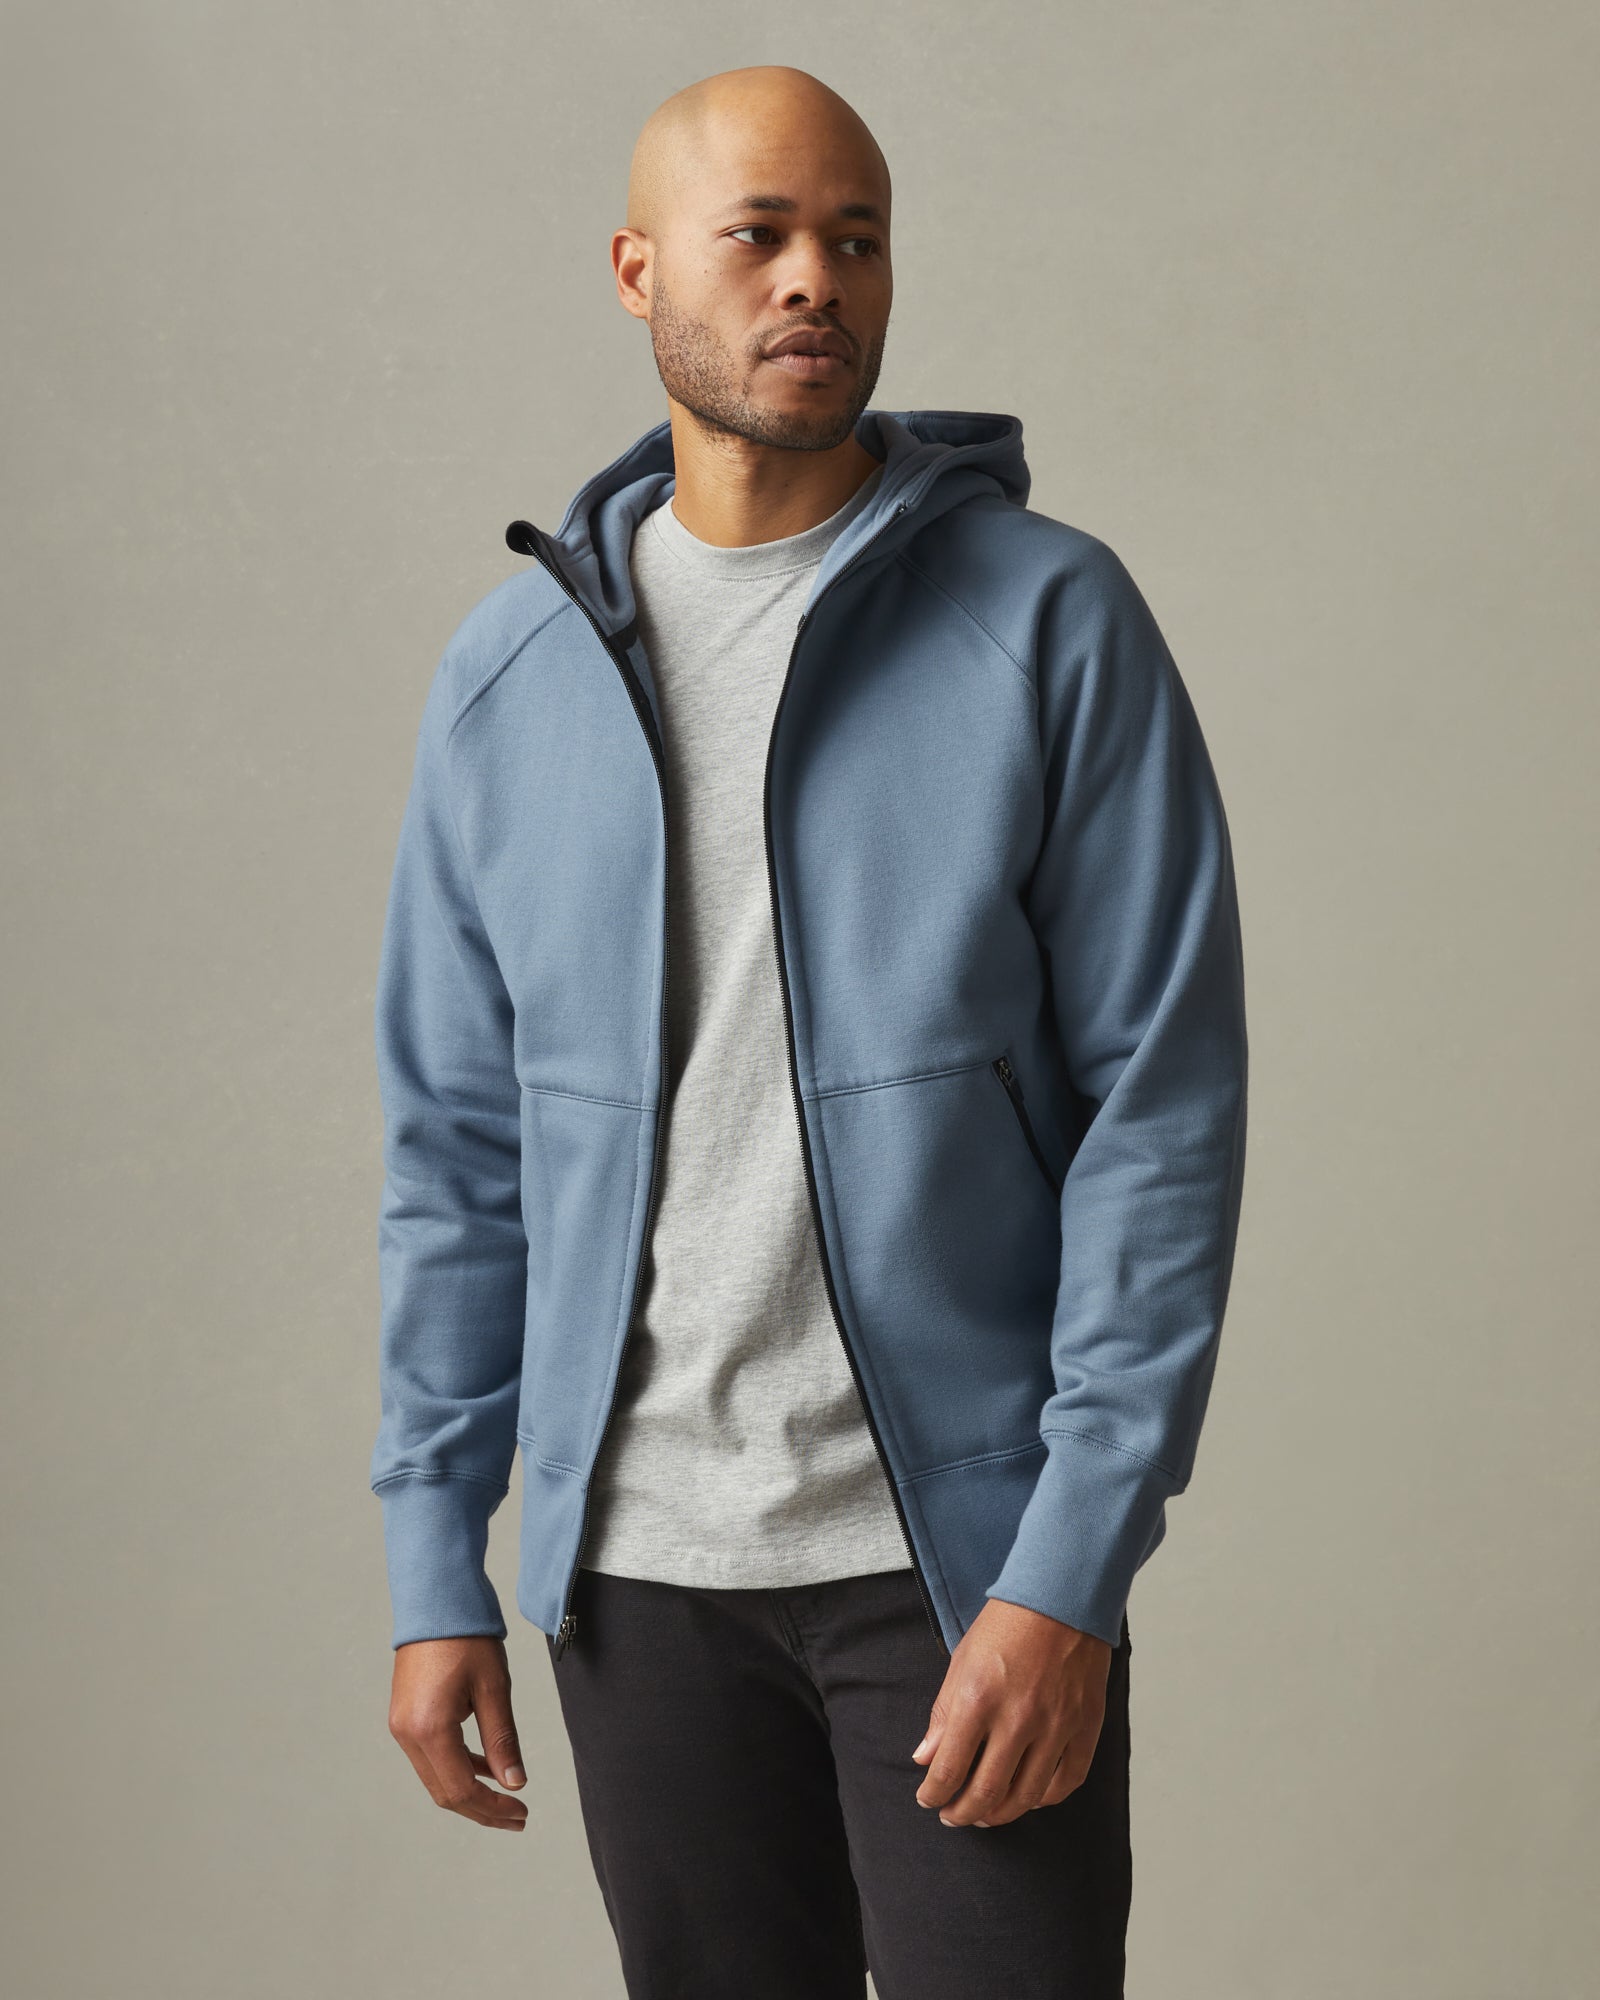 Scuba Oversized Full-Zip Hoodie Waist Length Jackets Sweatshirts